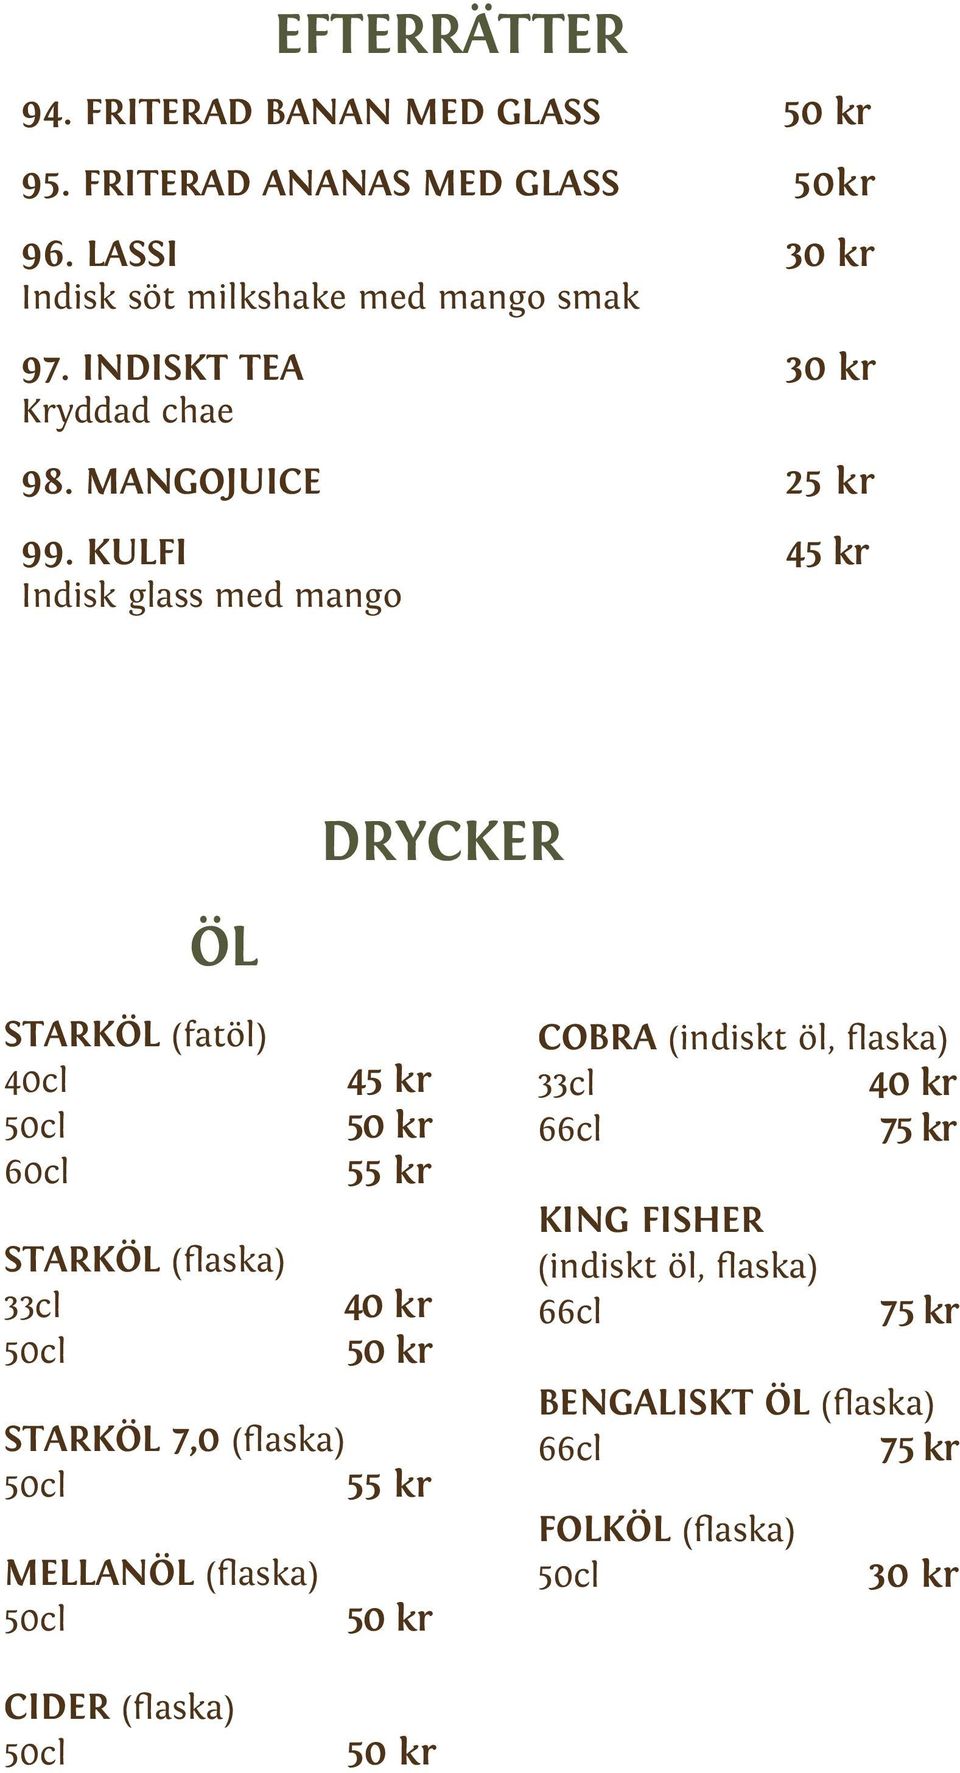 KULFI Indisk glass med mango ÖL drycker STARKÖL (fatöl) 40cl 50cl 60cl STARKÖL (flaska) 3 50cl 50 kr 55 kr 40 kr 50 kr STARKÖL 7,0